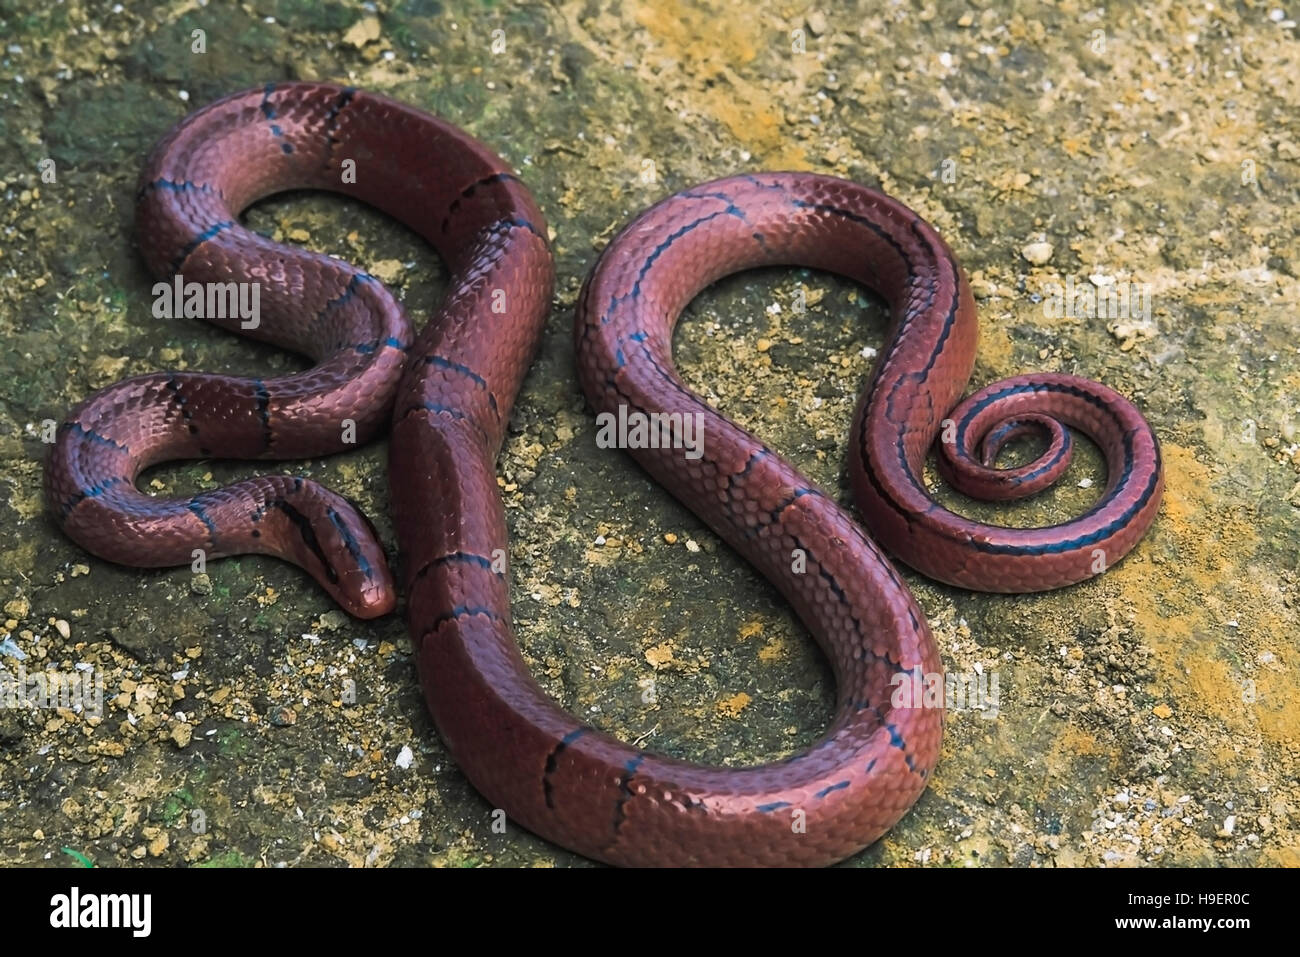 Elaphe Porphyracea Porphyracea. Red Bamboo Rat snake. Non venomous. Arunachal Pradesh, India. Stock Photo